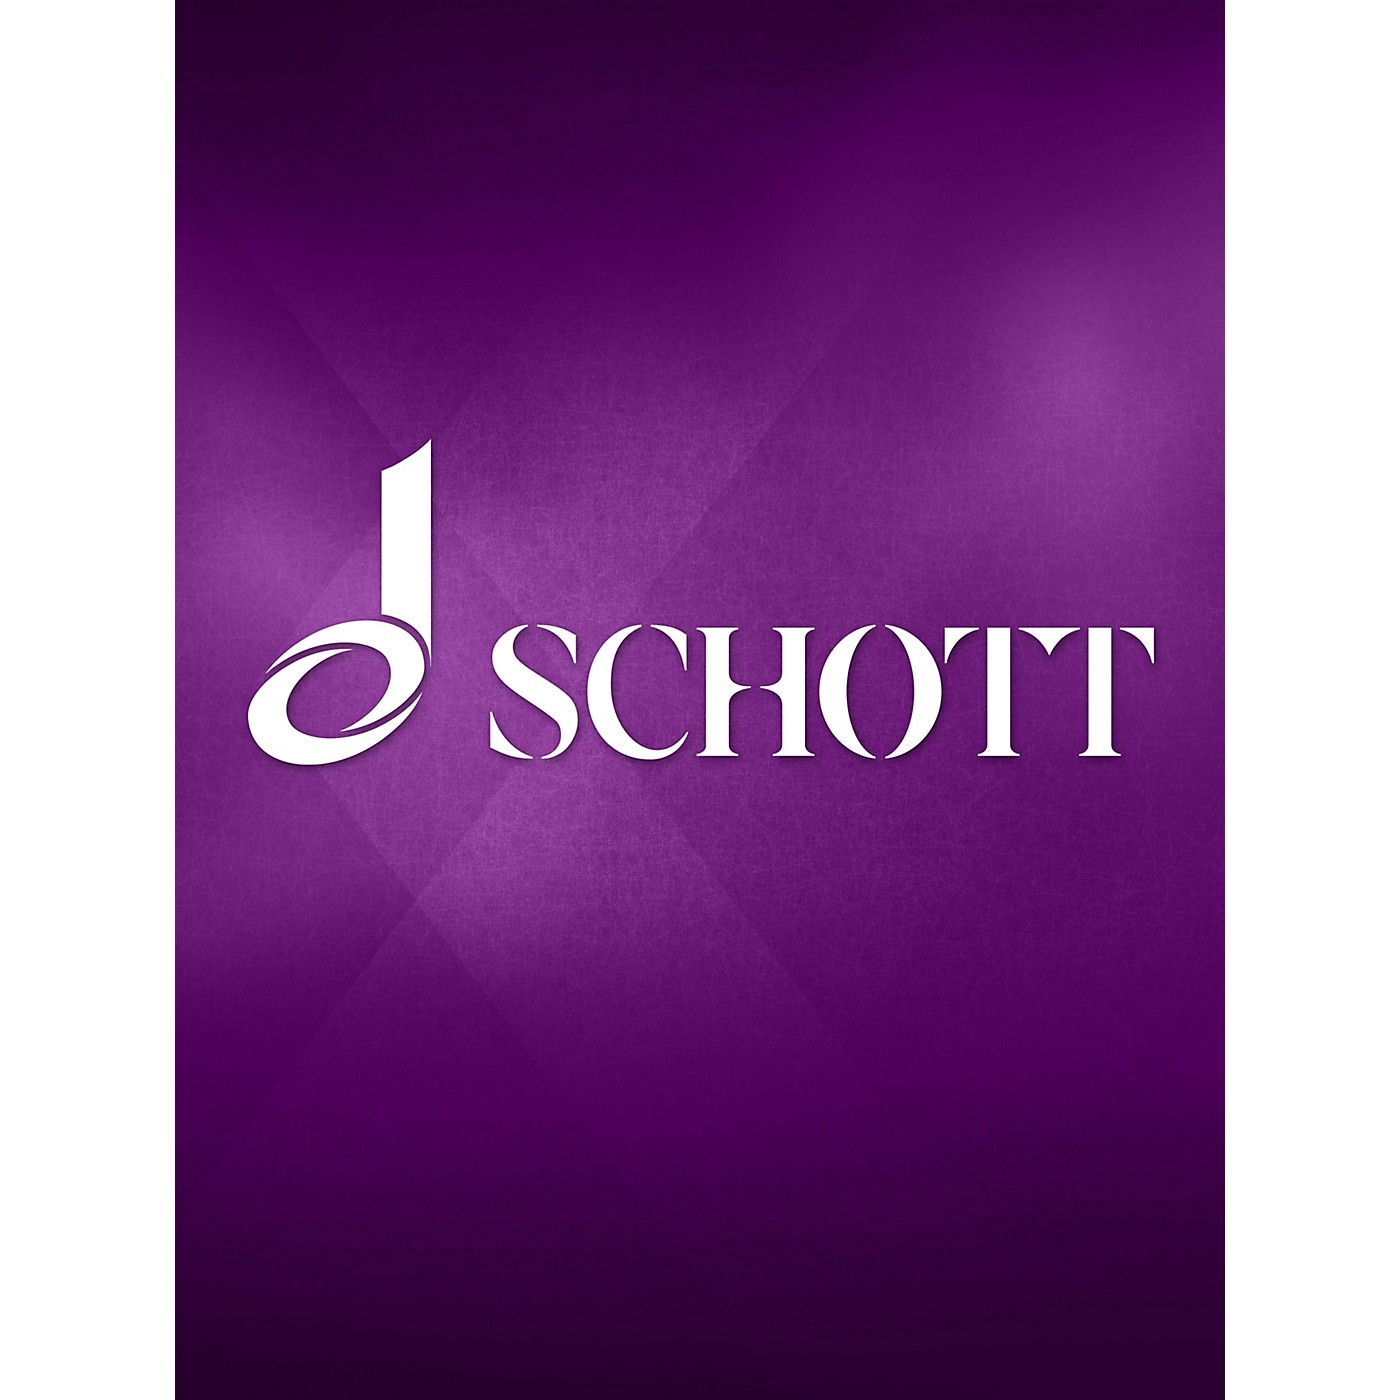 Schott Chor-Express Volume 3 (Choral Score) CHORUS 10PAK Composed by Various Arranged by Bernd Frank thumbnail